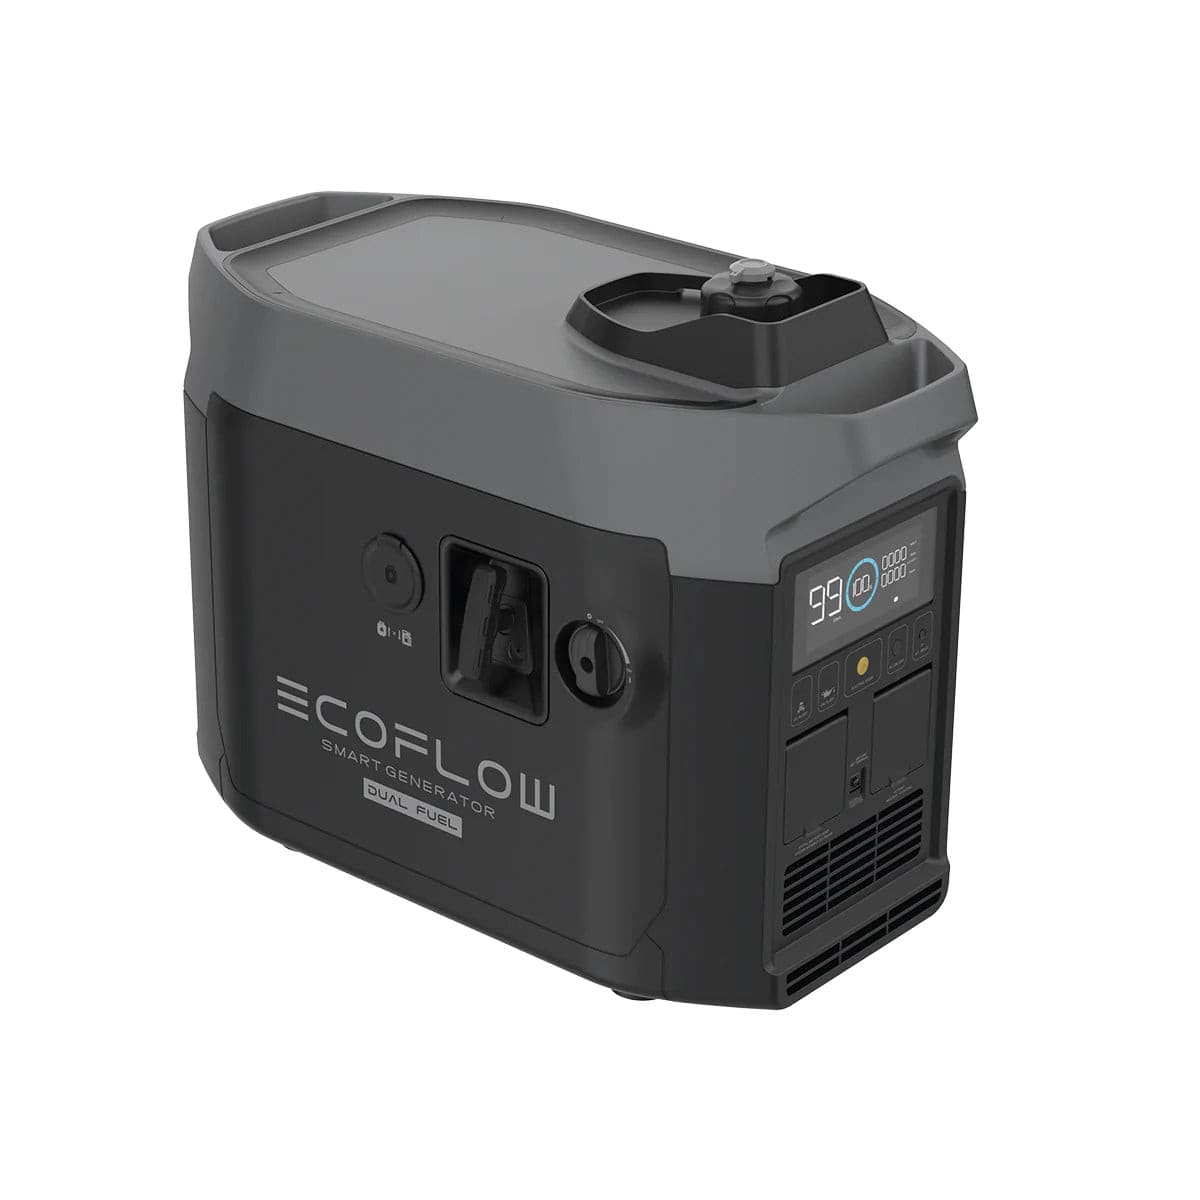 EcoFlow Smart Generator (Dual Fuel) Integrates with DELTA Series & Power Kit-EcoPowerit